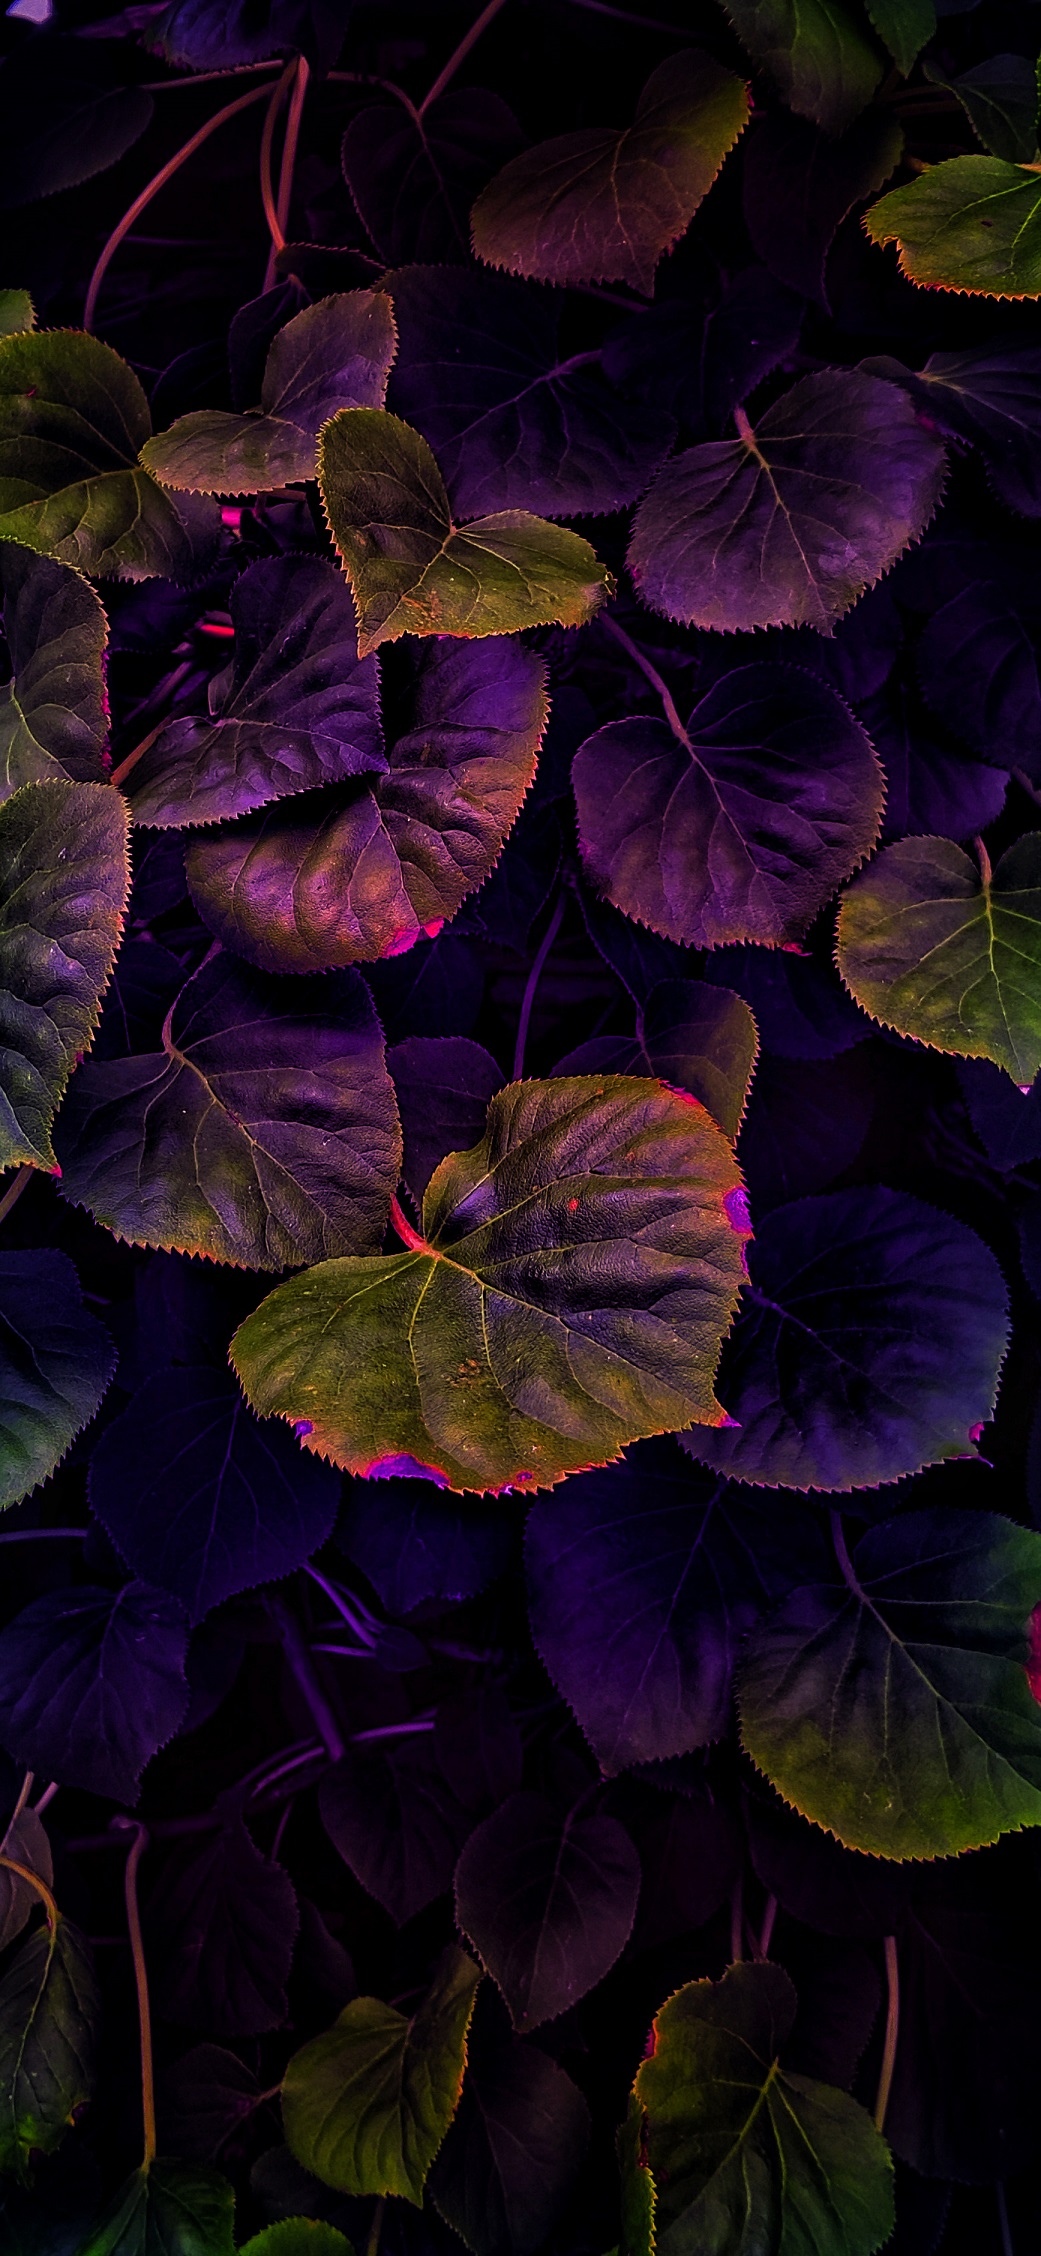 Nature-photography-iPhone-wallpaper-wallsbyjfl-HDR-purple